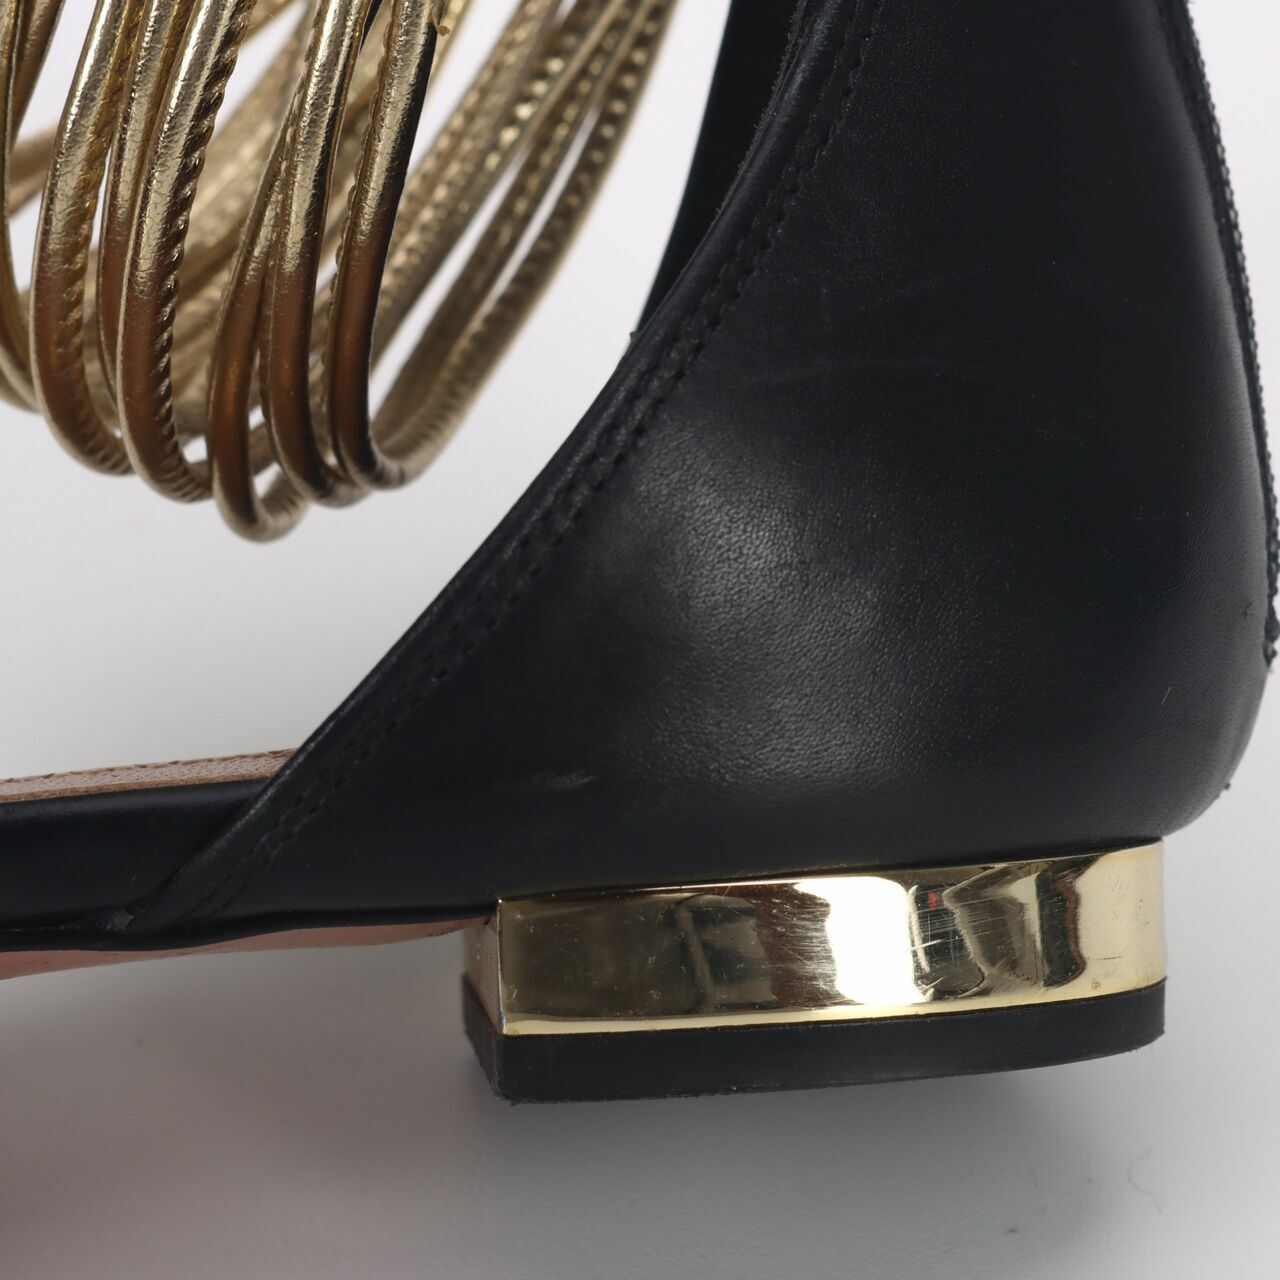 Aquazzura Gold & Black Ankle Strap Flats